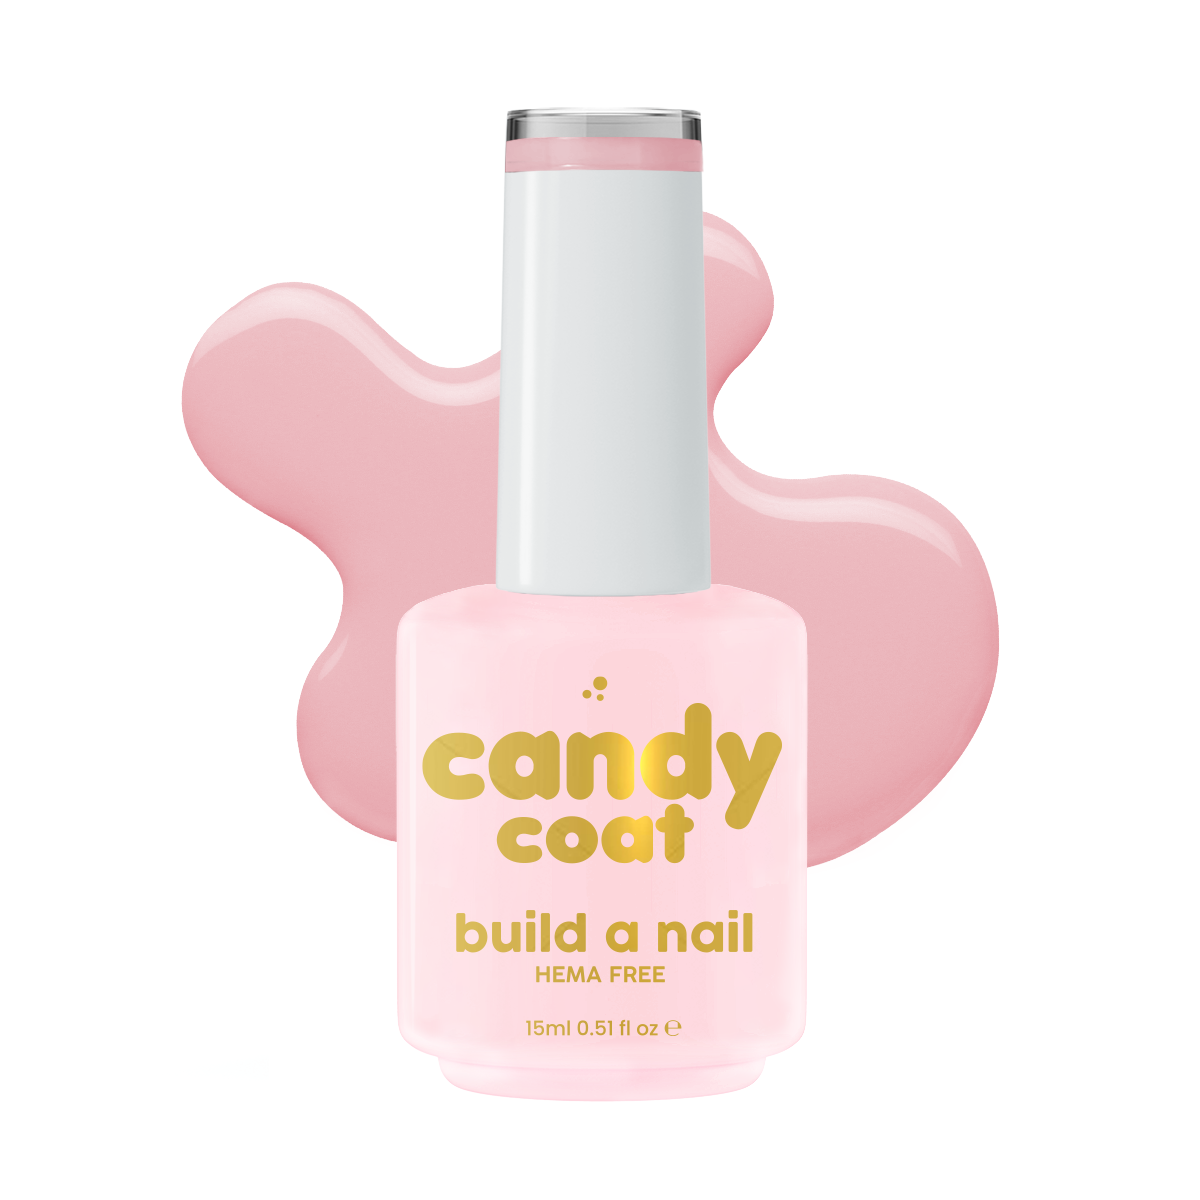 Candy Coat - HEMA Free Build-a-Nail® - BH016 15ml - Candy Coat